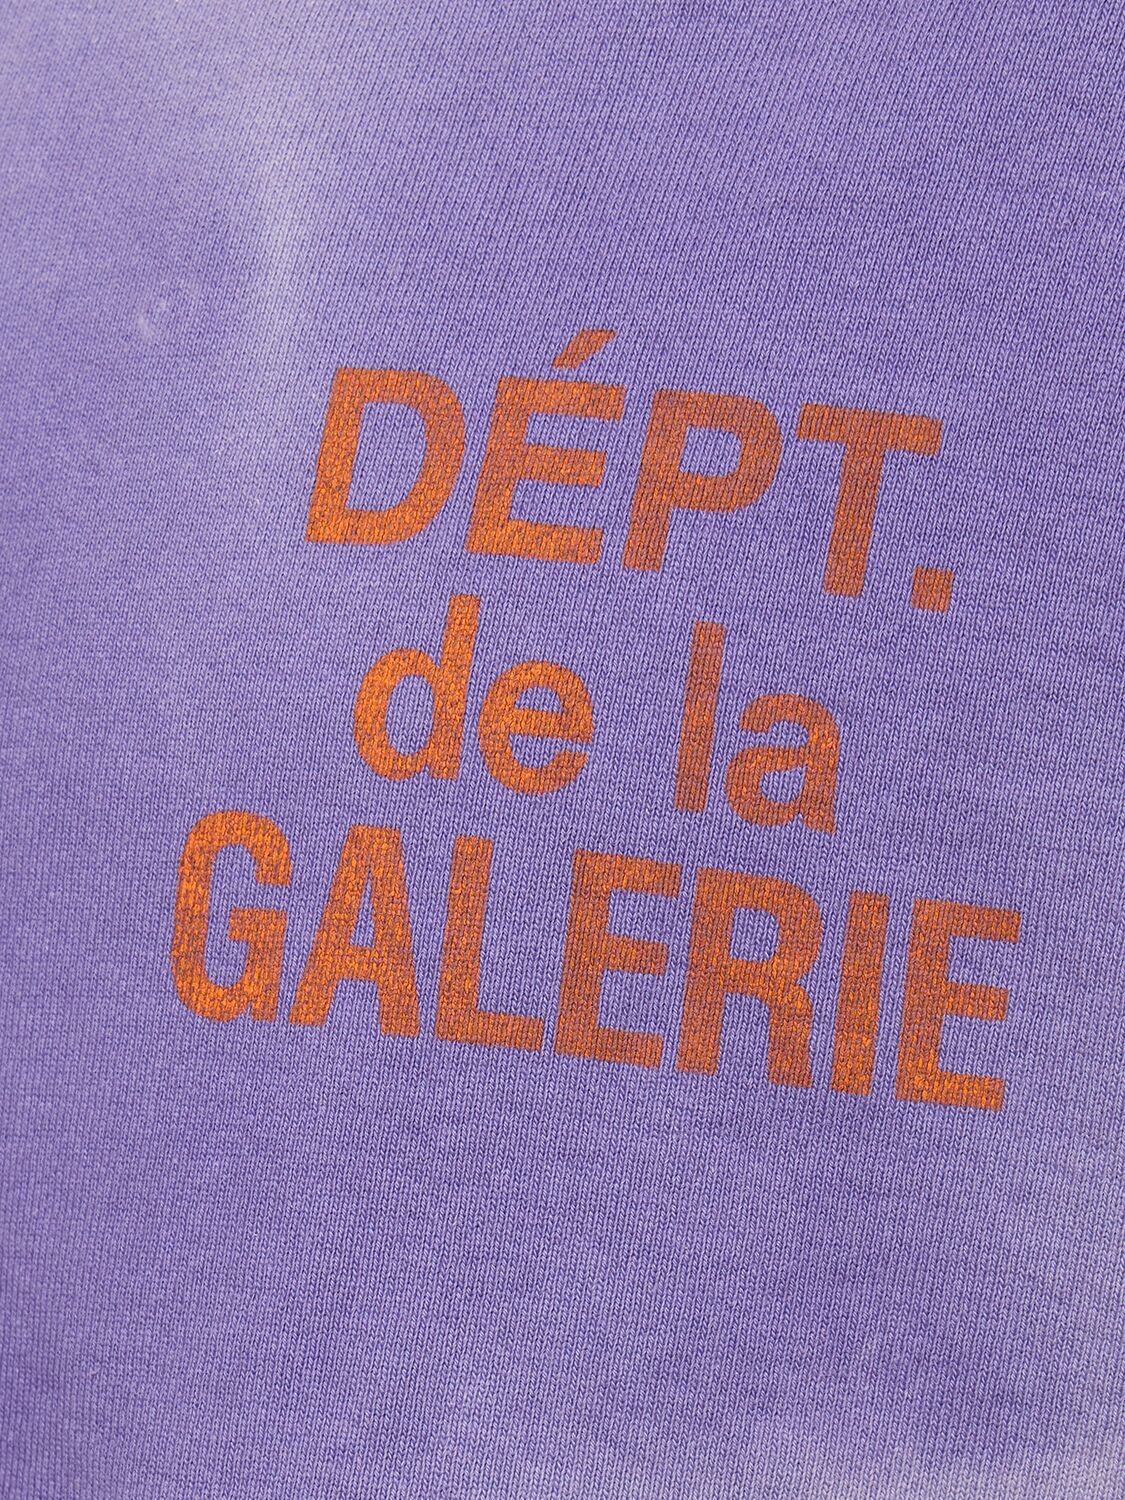 Shop Gallery Dept. Washed Logo Zip Hoodie In Purple